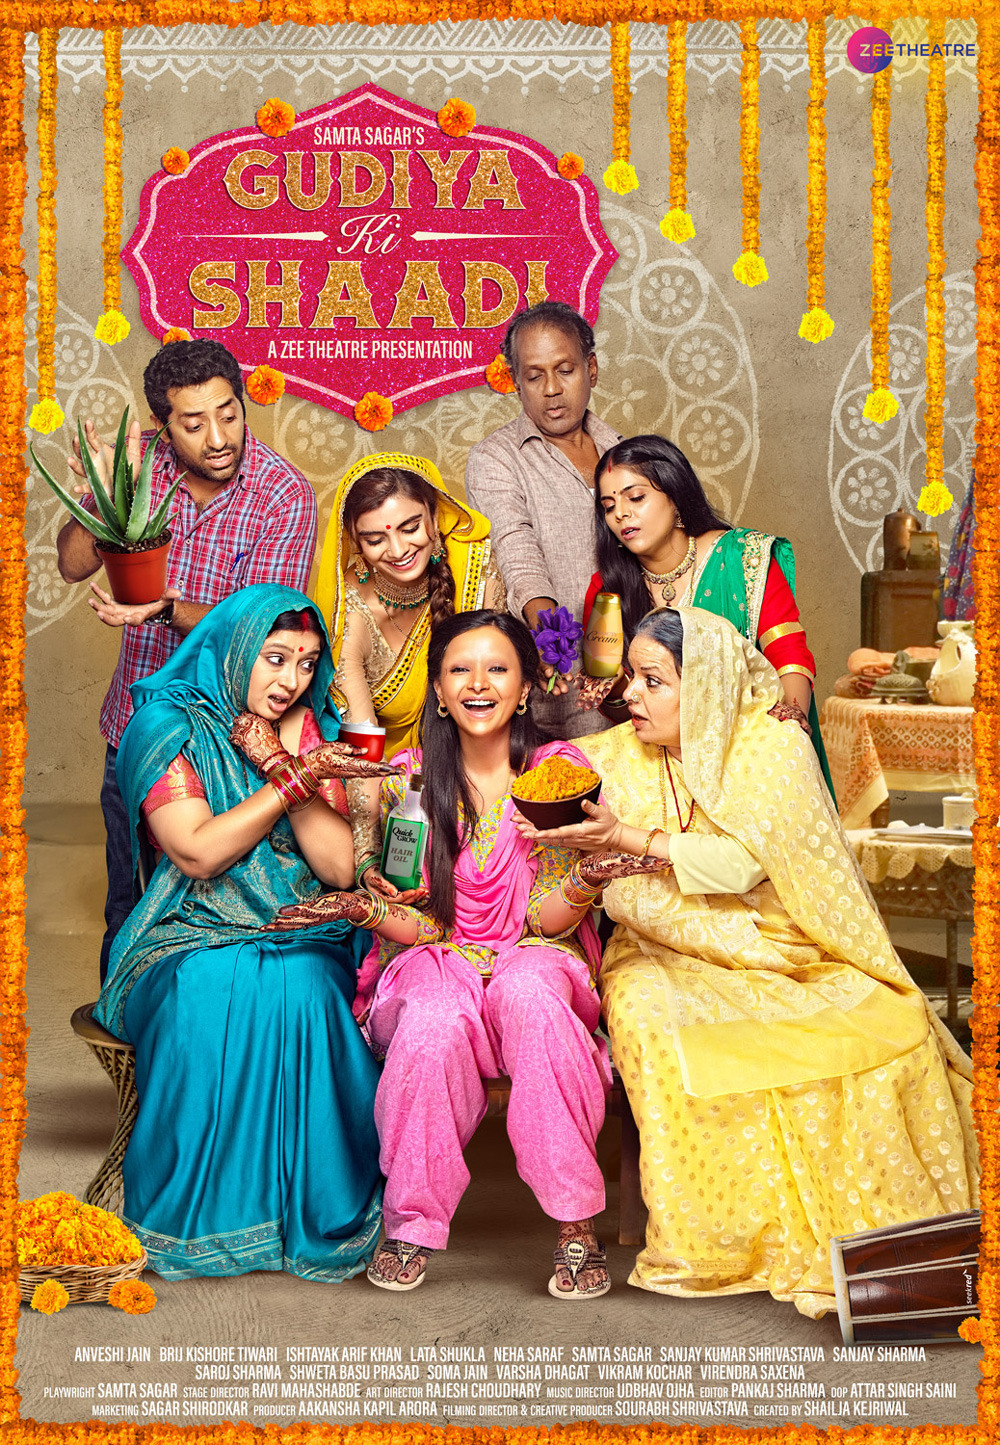 Extra Large TV Poster Image for Gudia Ki Shaadi (#2 of 2)